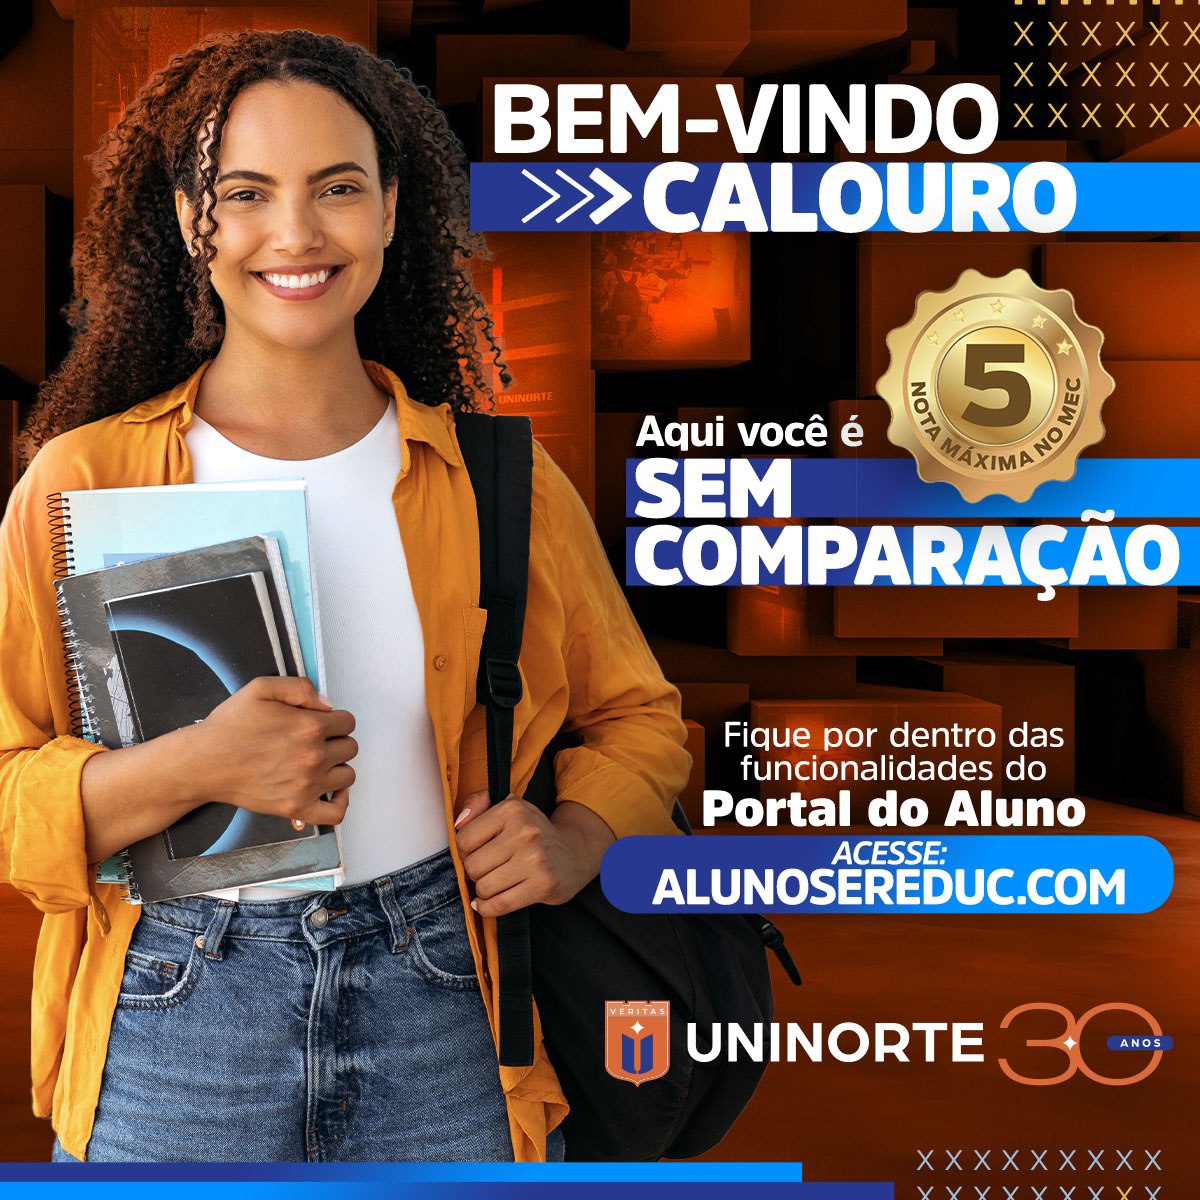 (c) Uninorte.com.br